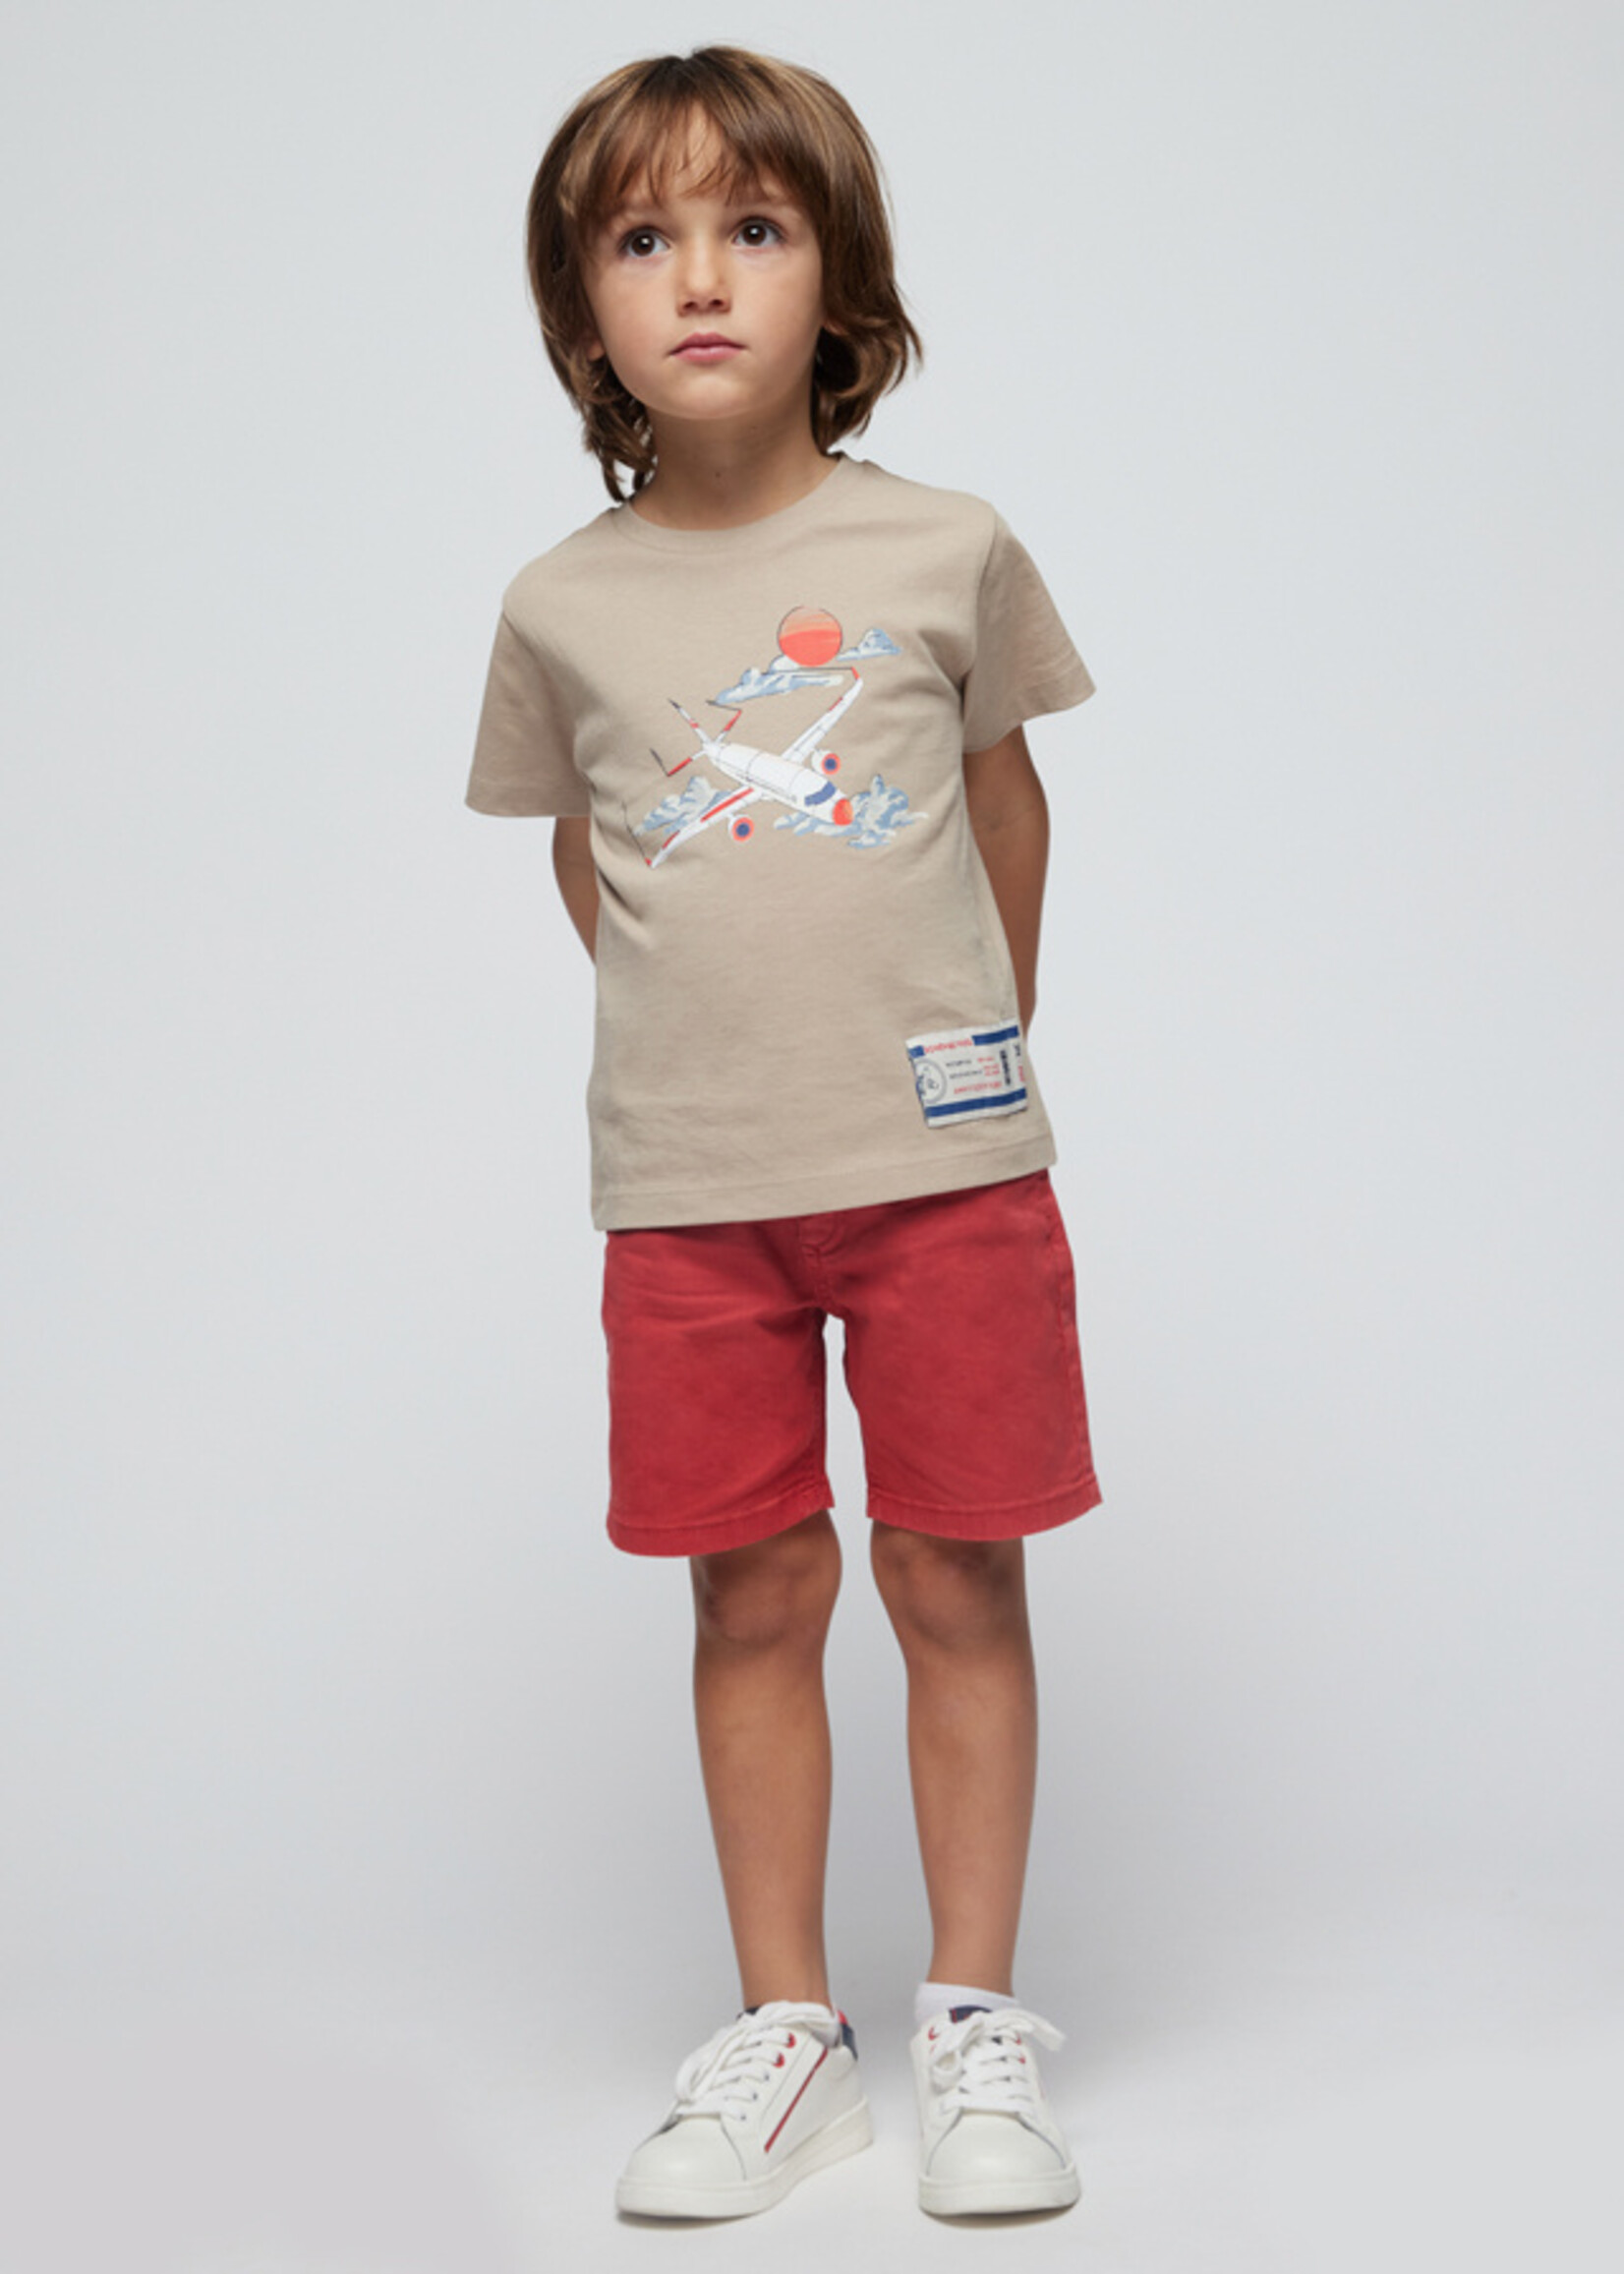 Mayoral Mini Boy             3020 S/s t-shirt                   Cream